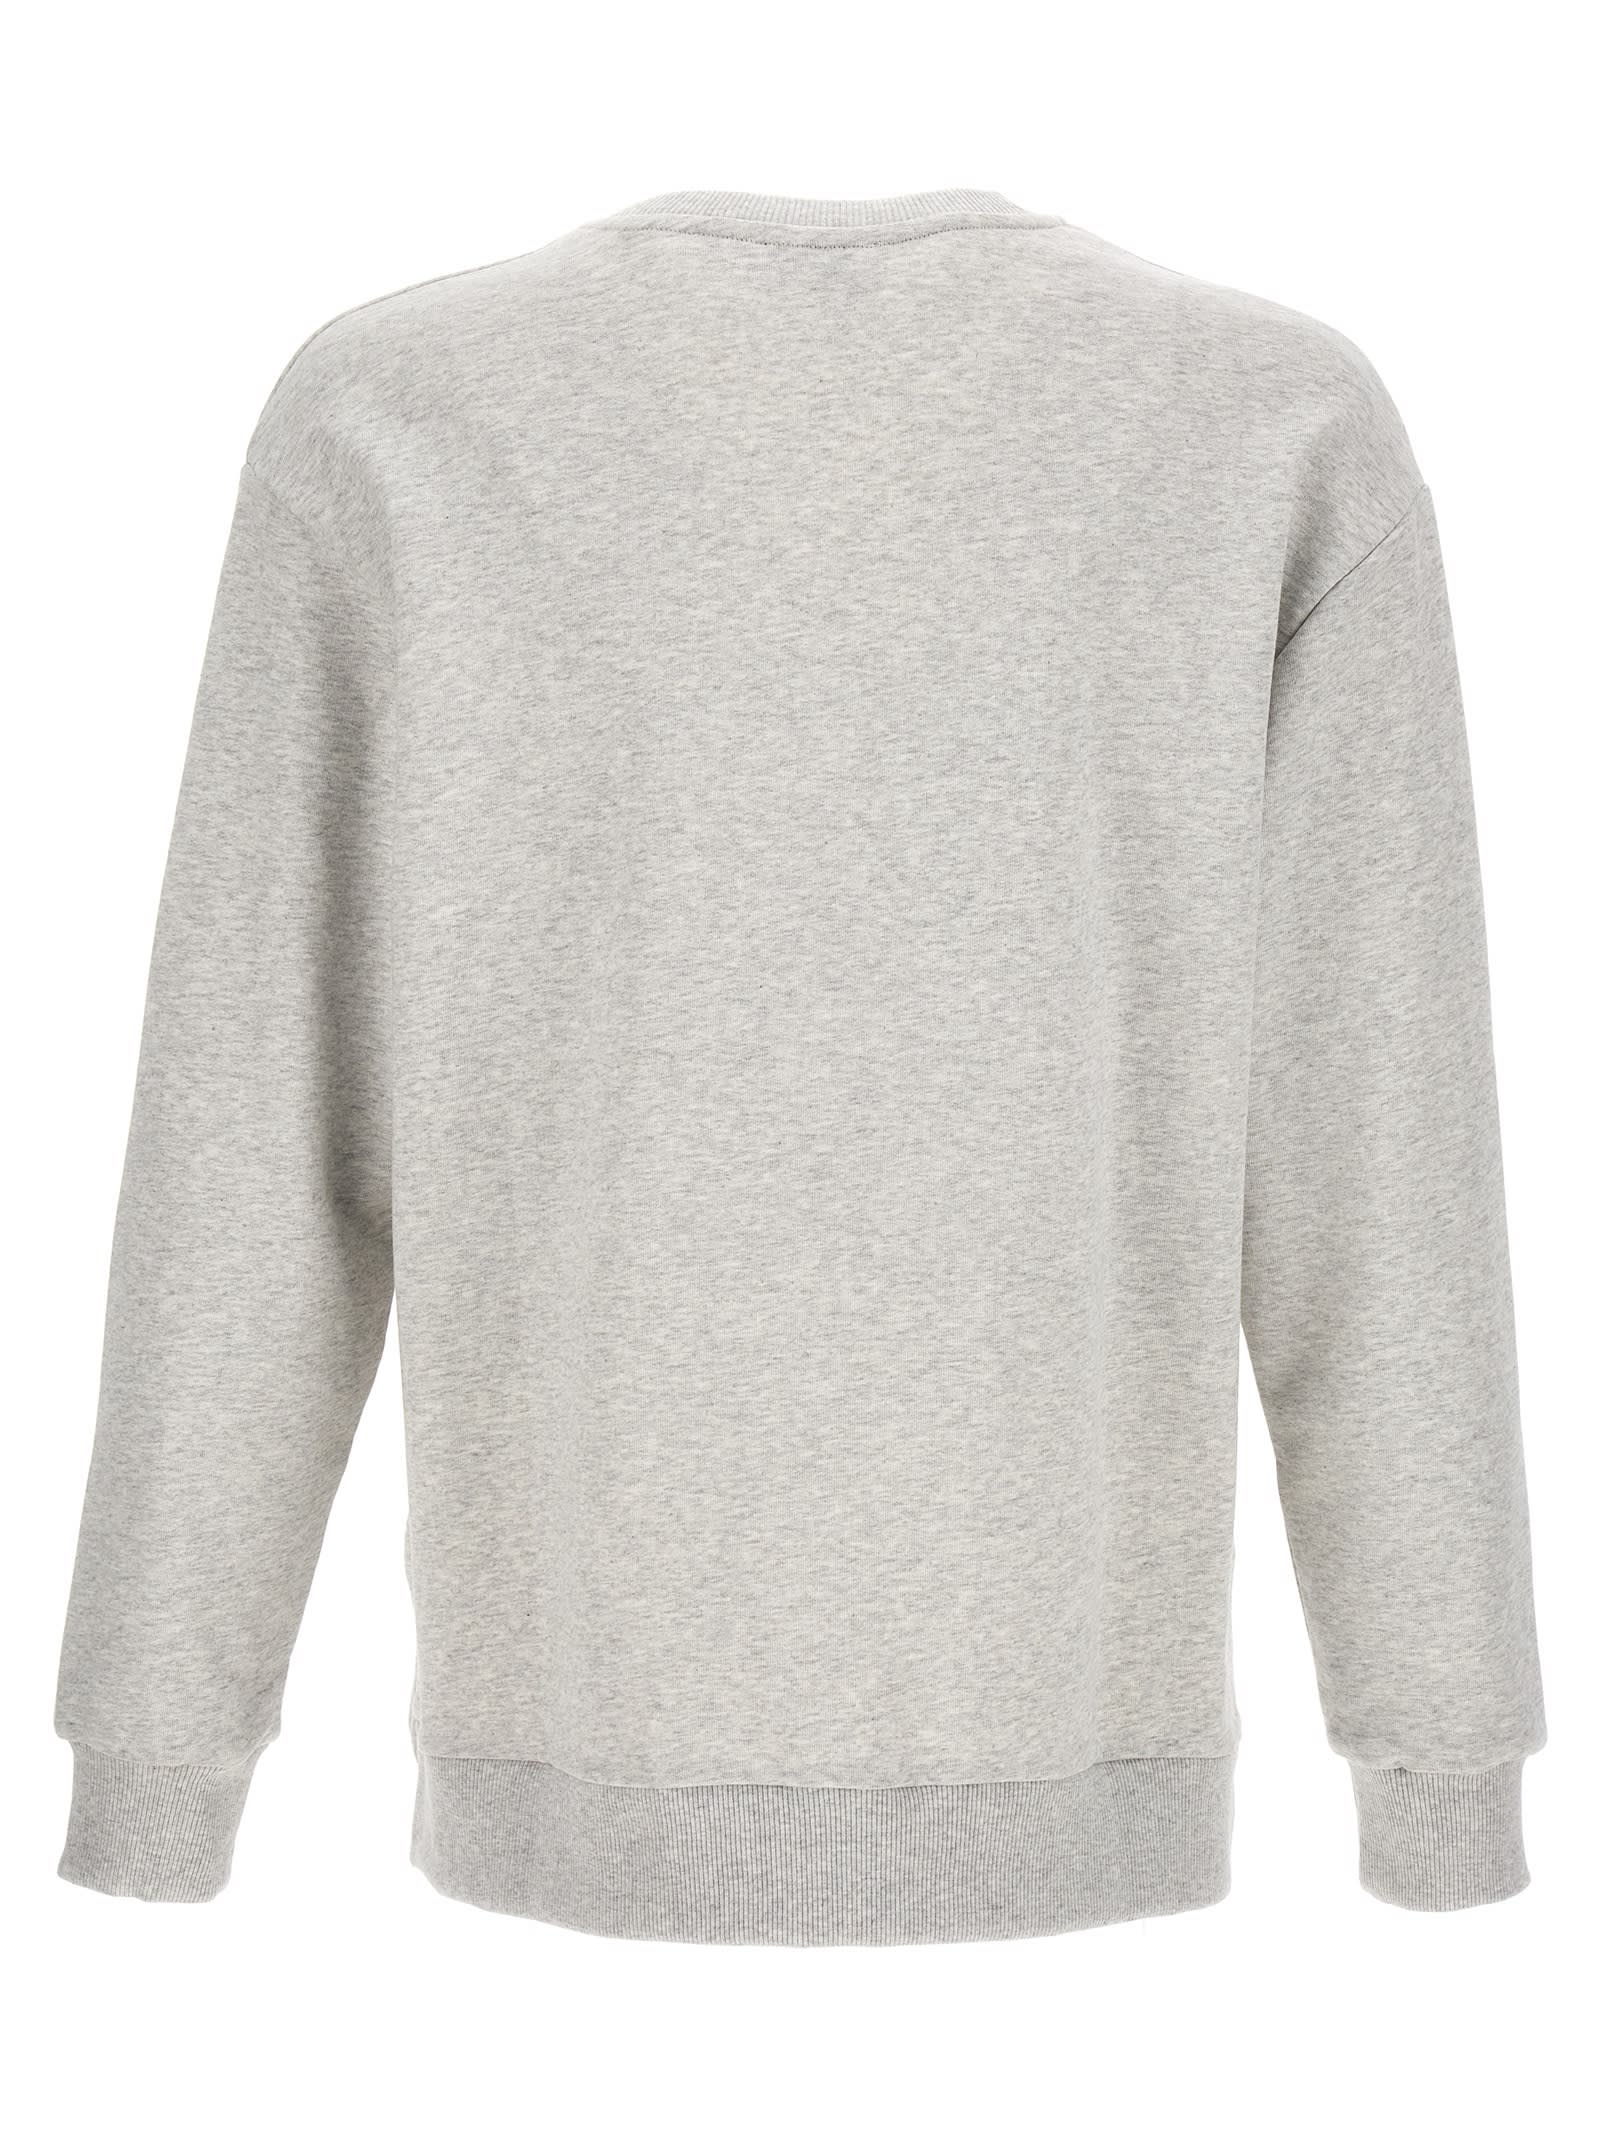 Shop Apc Alastor Sweatshirt In Grey